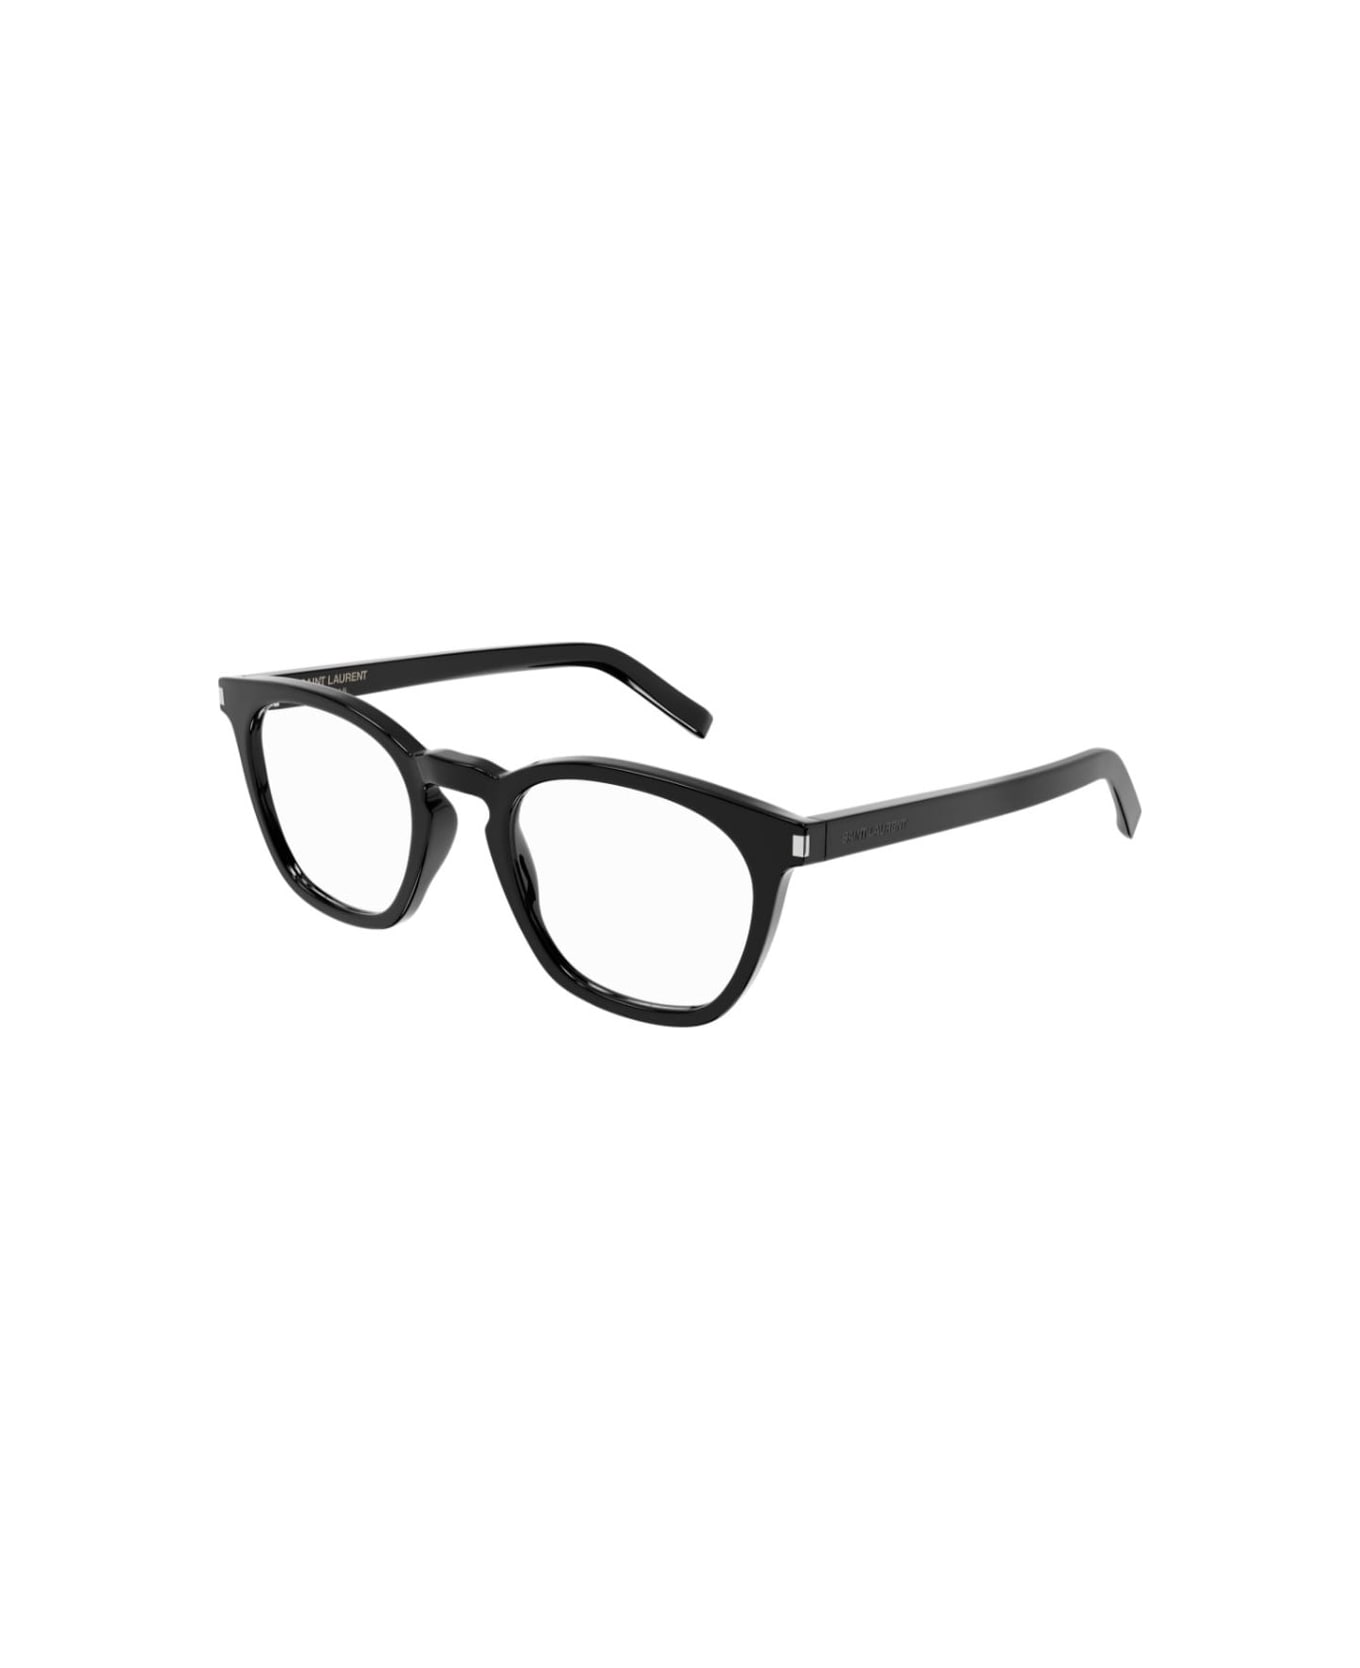 Saint Laurent Eyewear SL28V 001 Glasses - Nero アイウェア